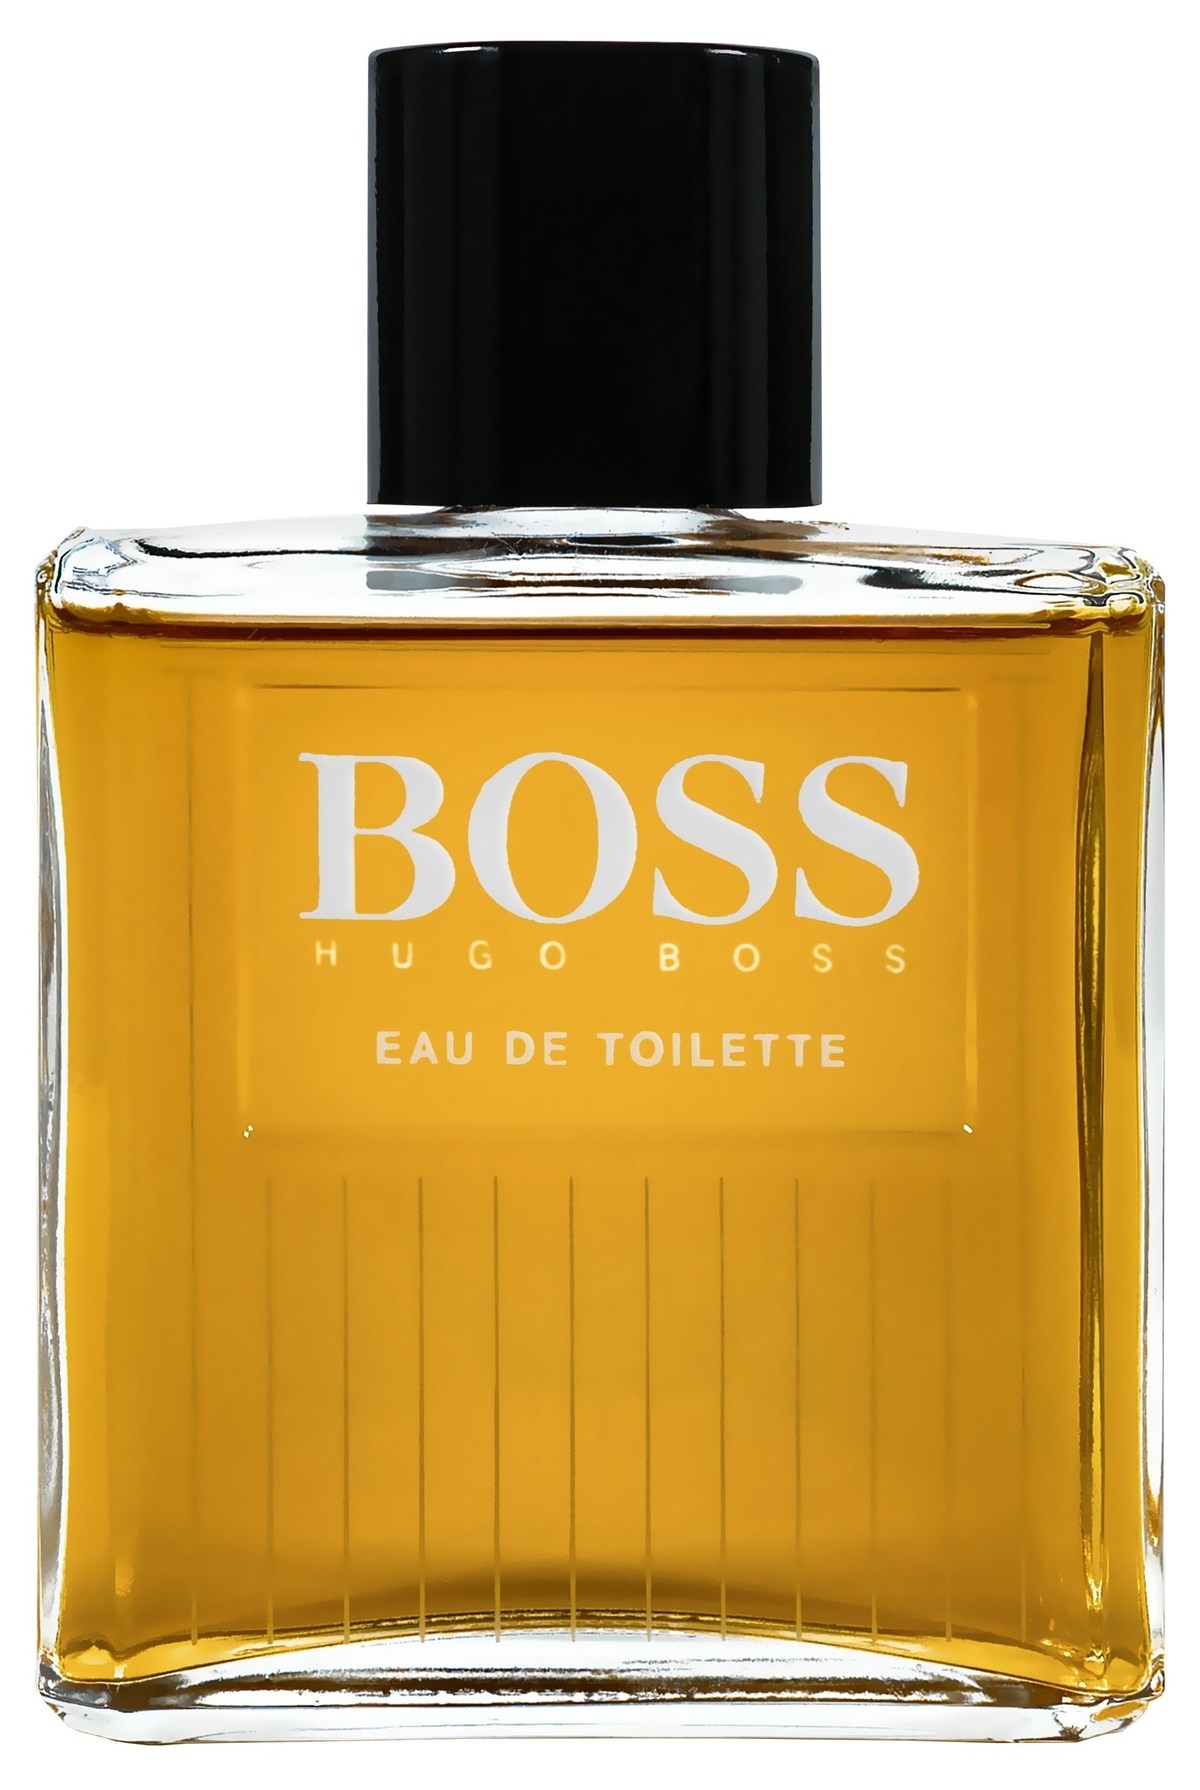 Akademi Forfølge Pygmalion Boss Number One / Boss by Hugo Boss (Eau de Toilette) » Reviews & Perfume  Facts